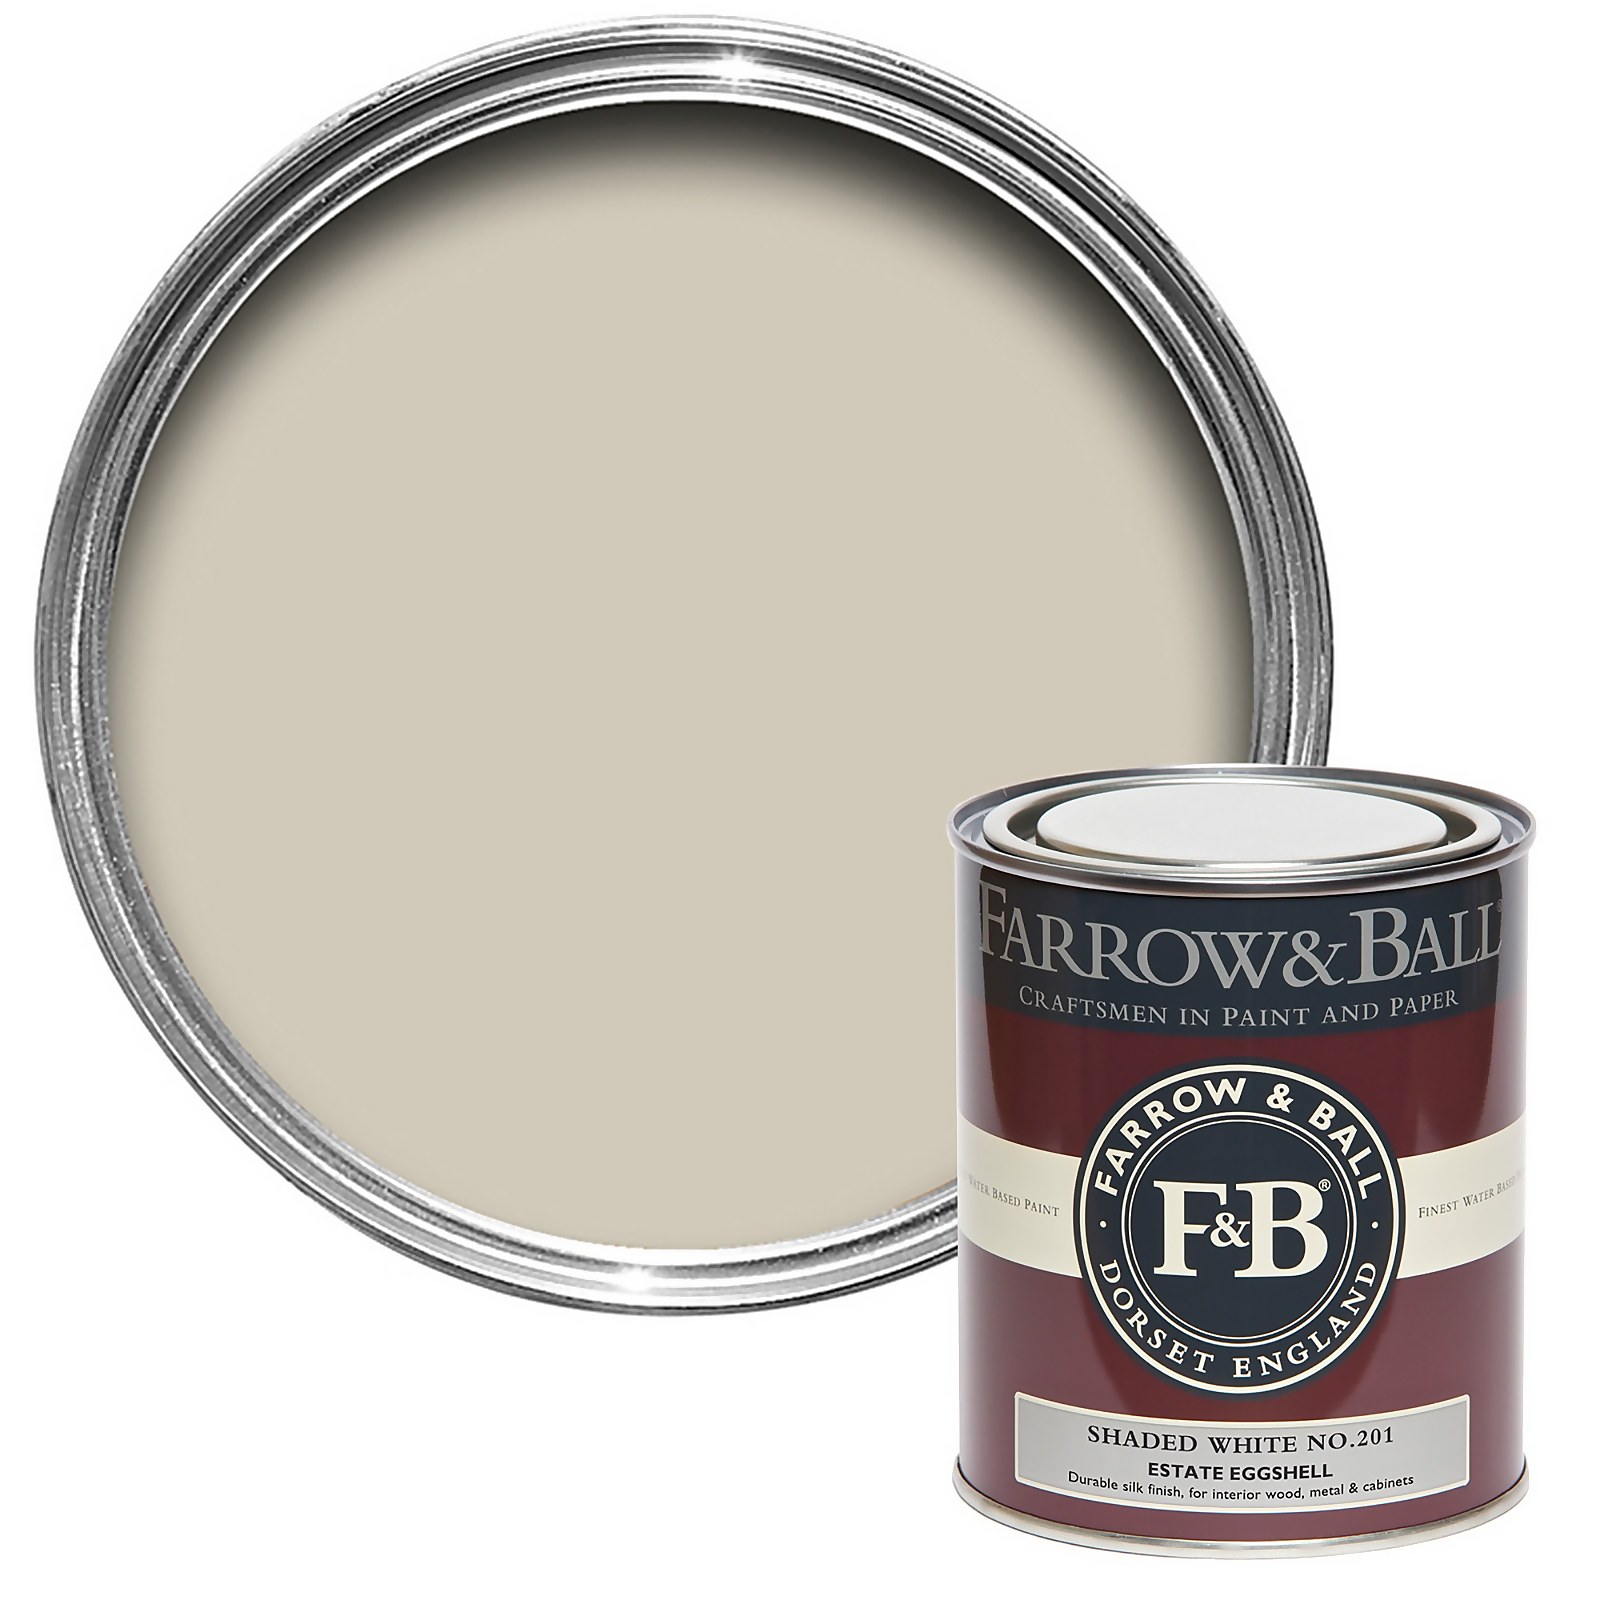 Farrow & Ball Estate Eggshell Paint Shaded White No.201 - 750ml